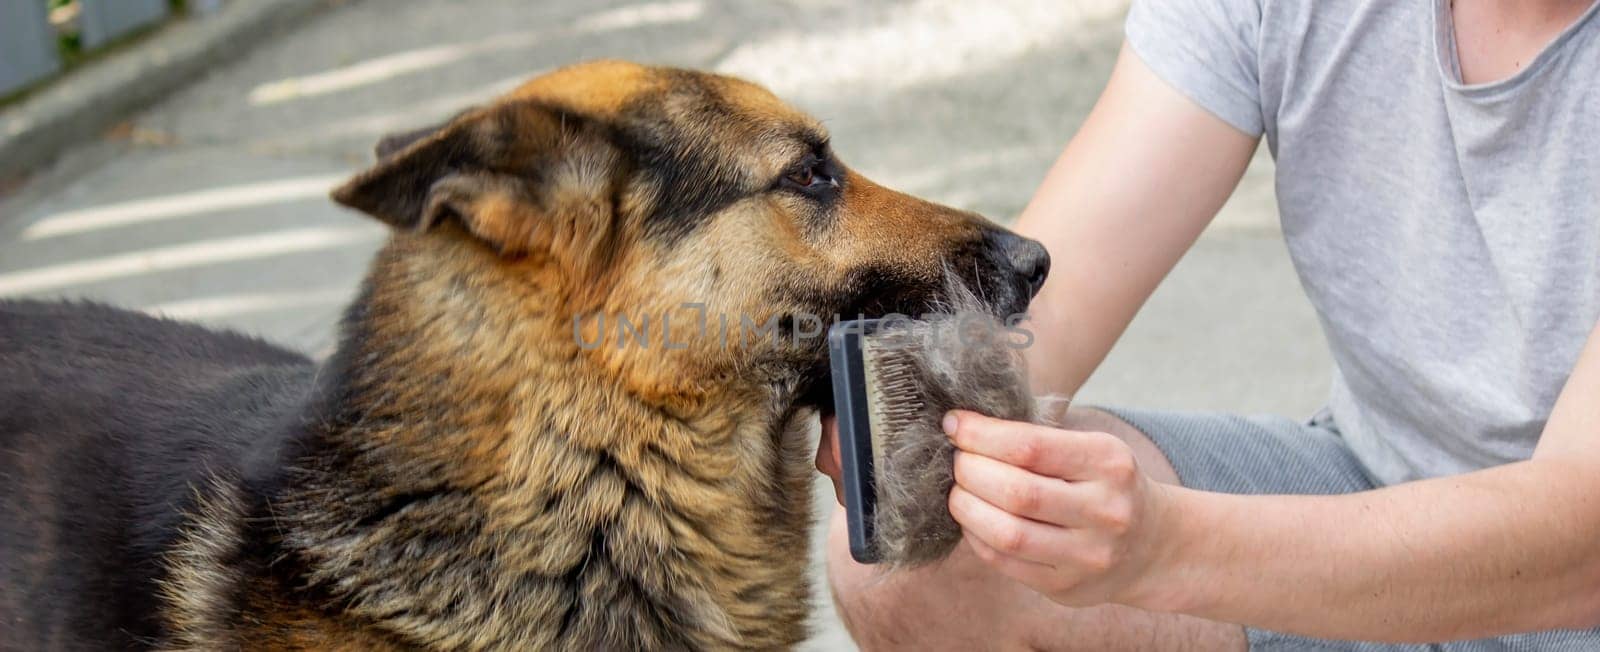 a man combs a dog's fur with a brush. Selective focus